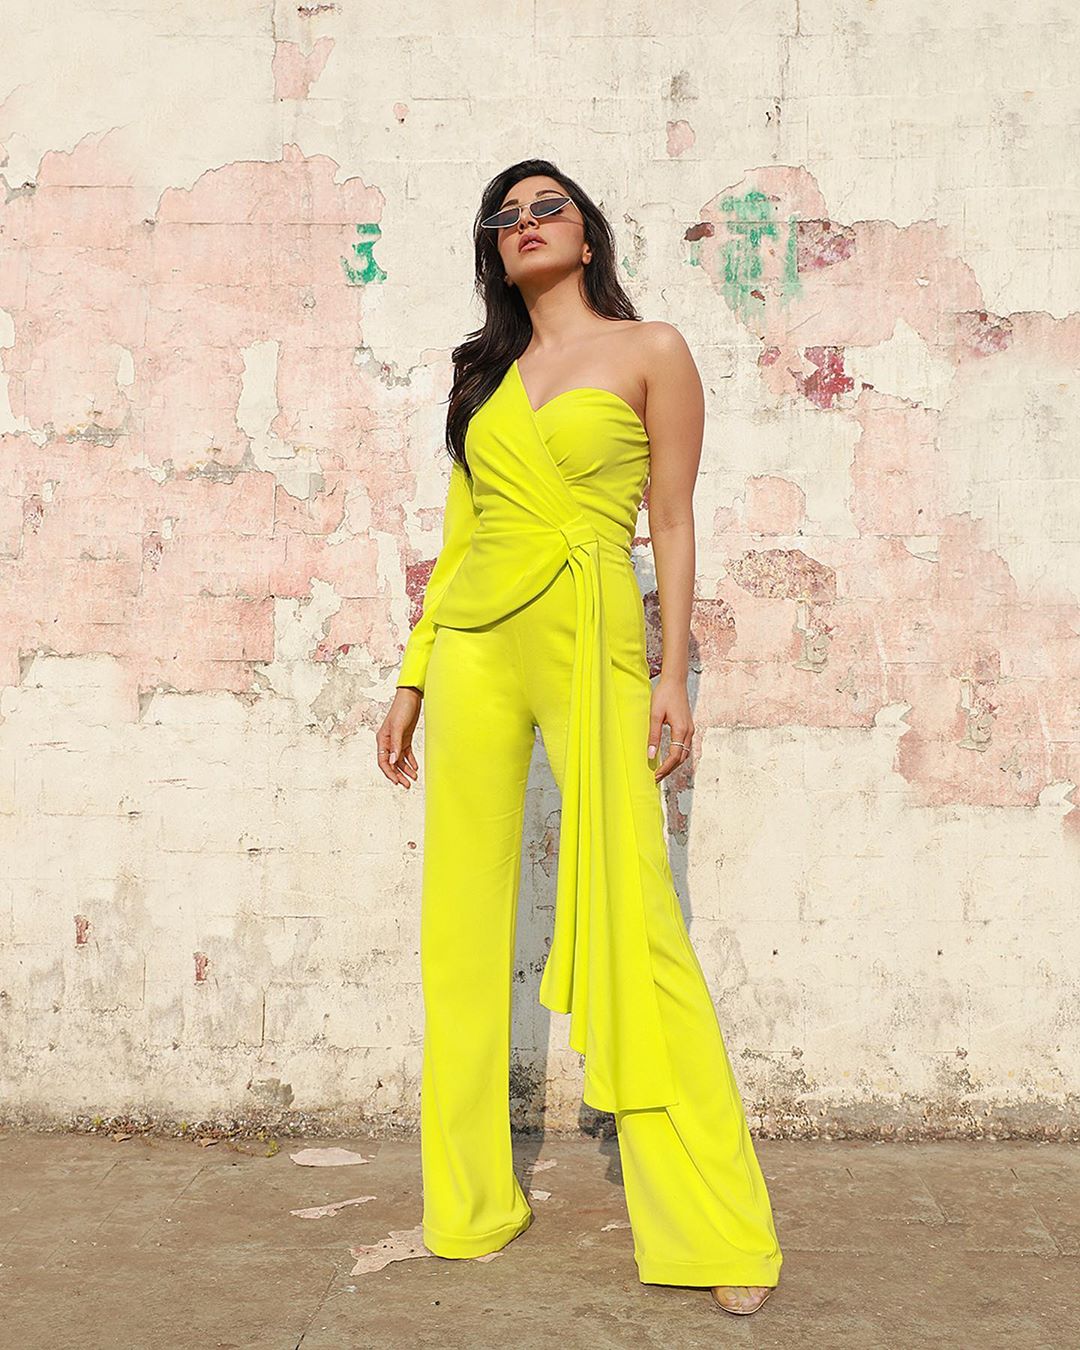 Kiara Advani in glamorous yellow